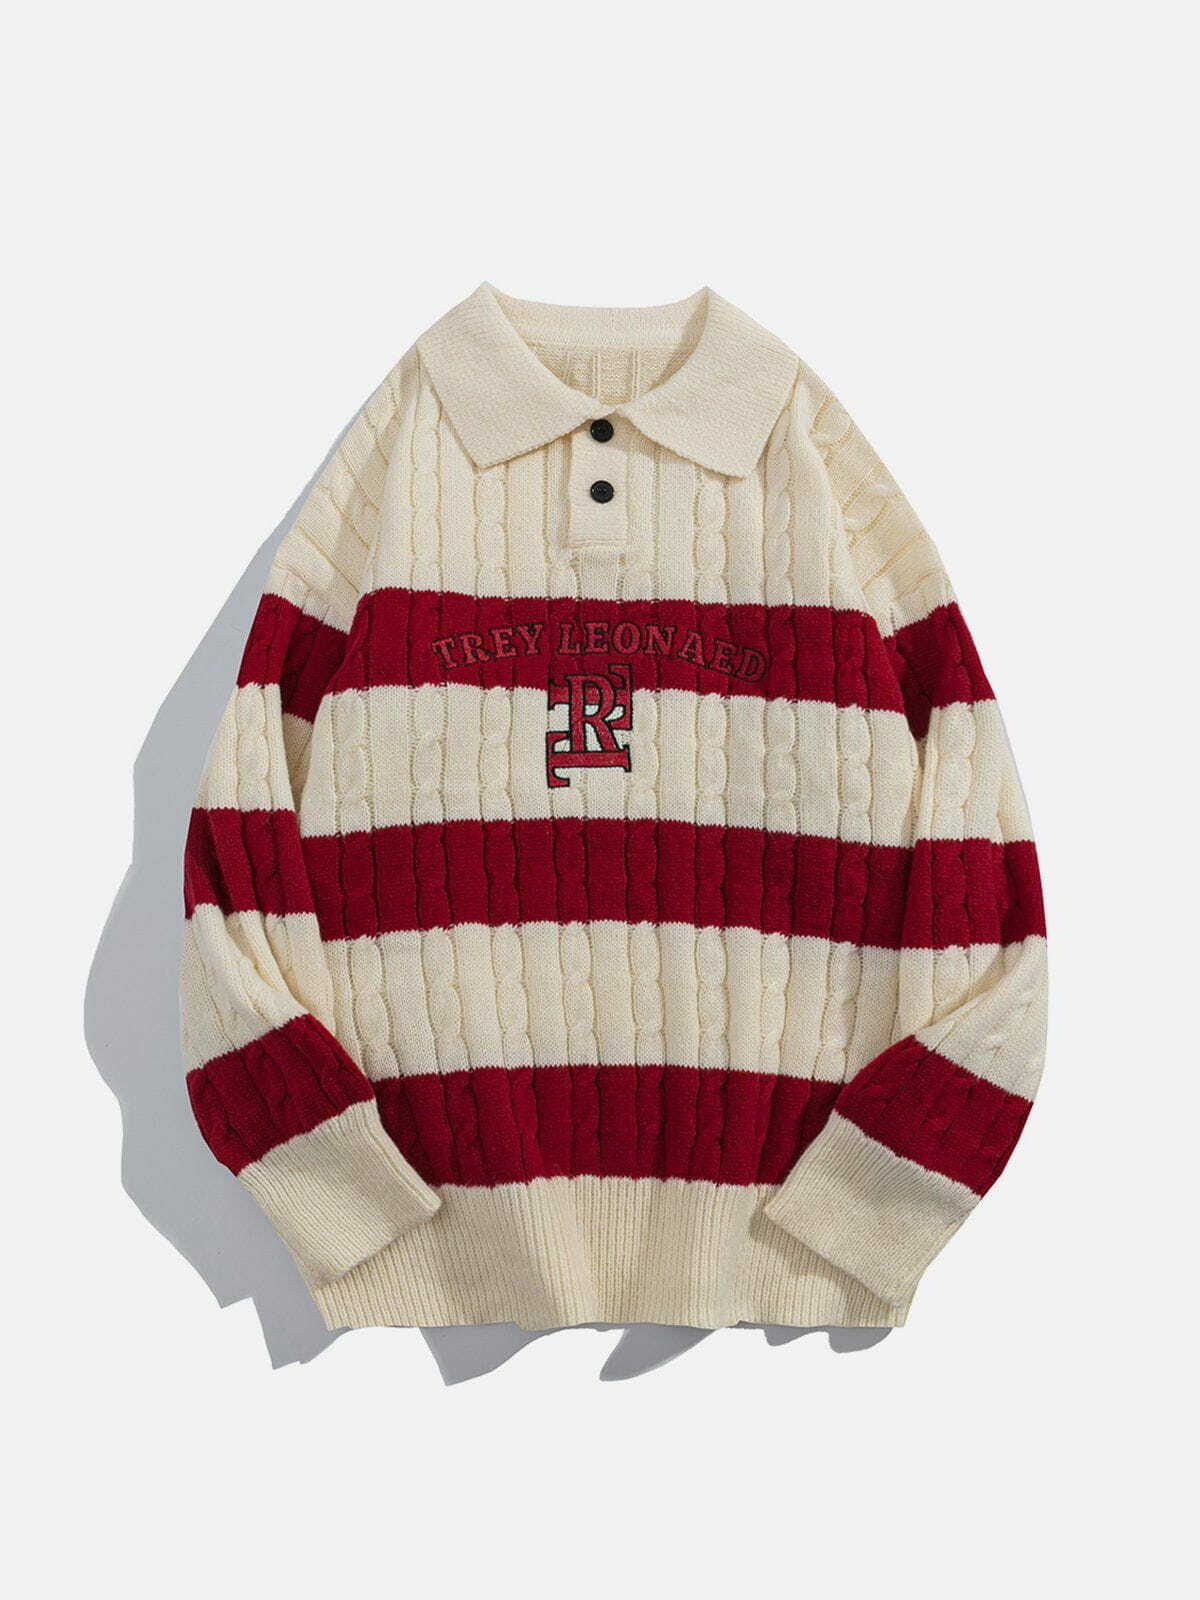 dynamic stripe polo sweater youthful & stylish streetwear 2794